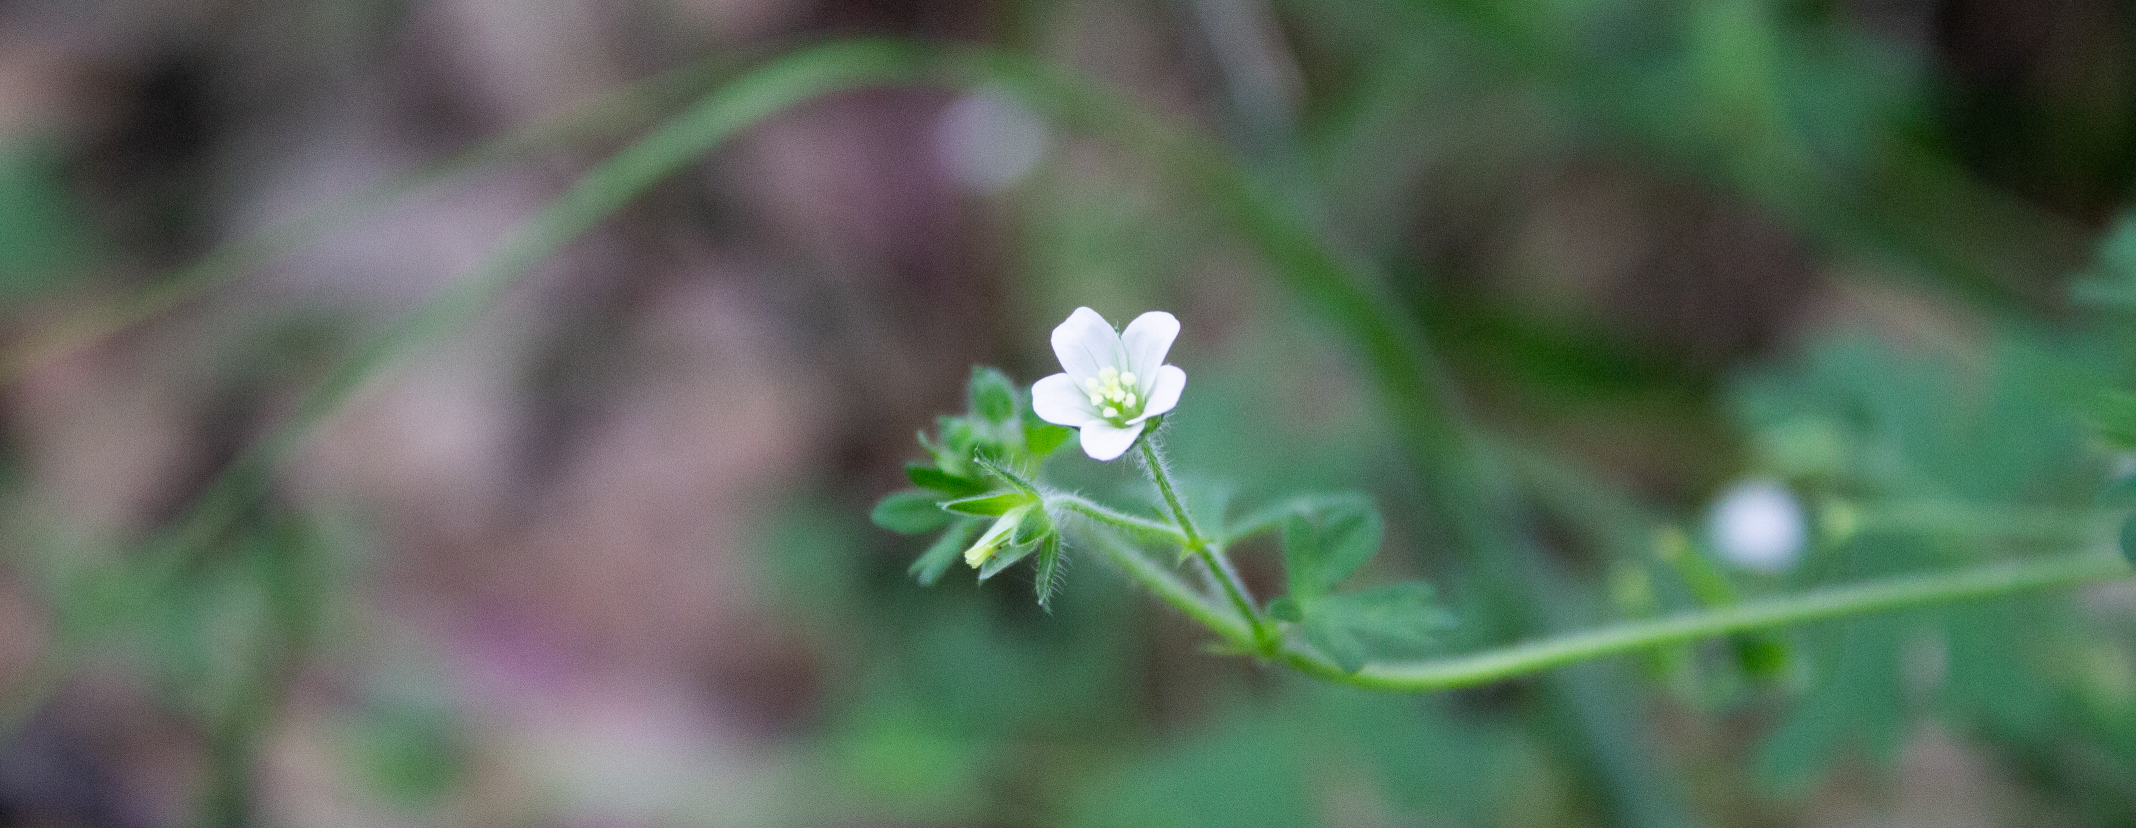 White Geranium flower